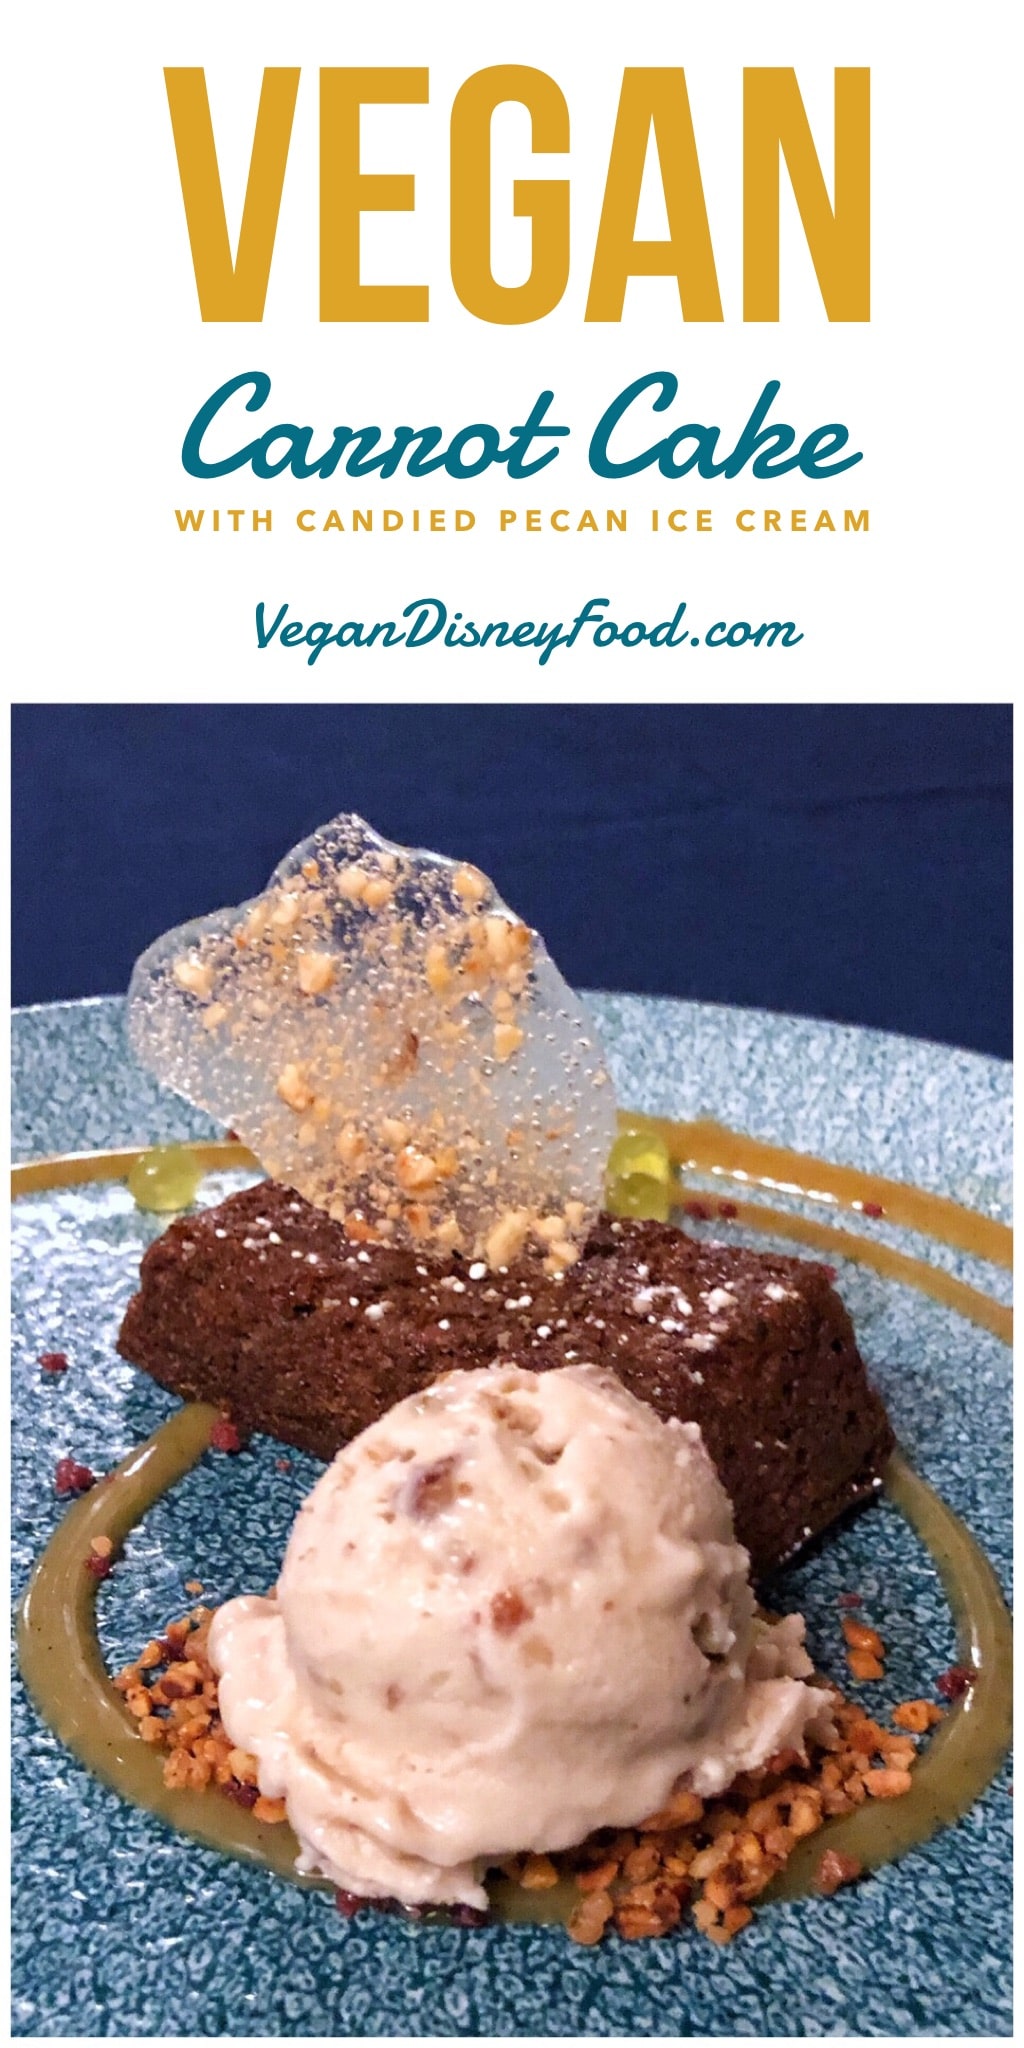 Vegan Carrot Cake at Narcoossee’s in Disney’s Grand Floridian Resort at Walt Disney World